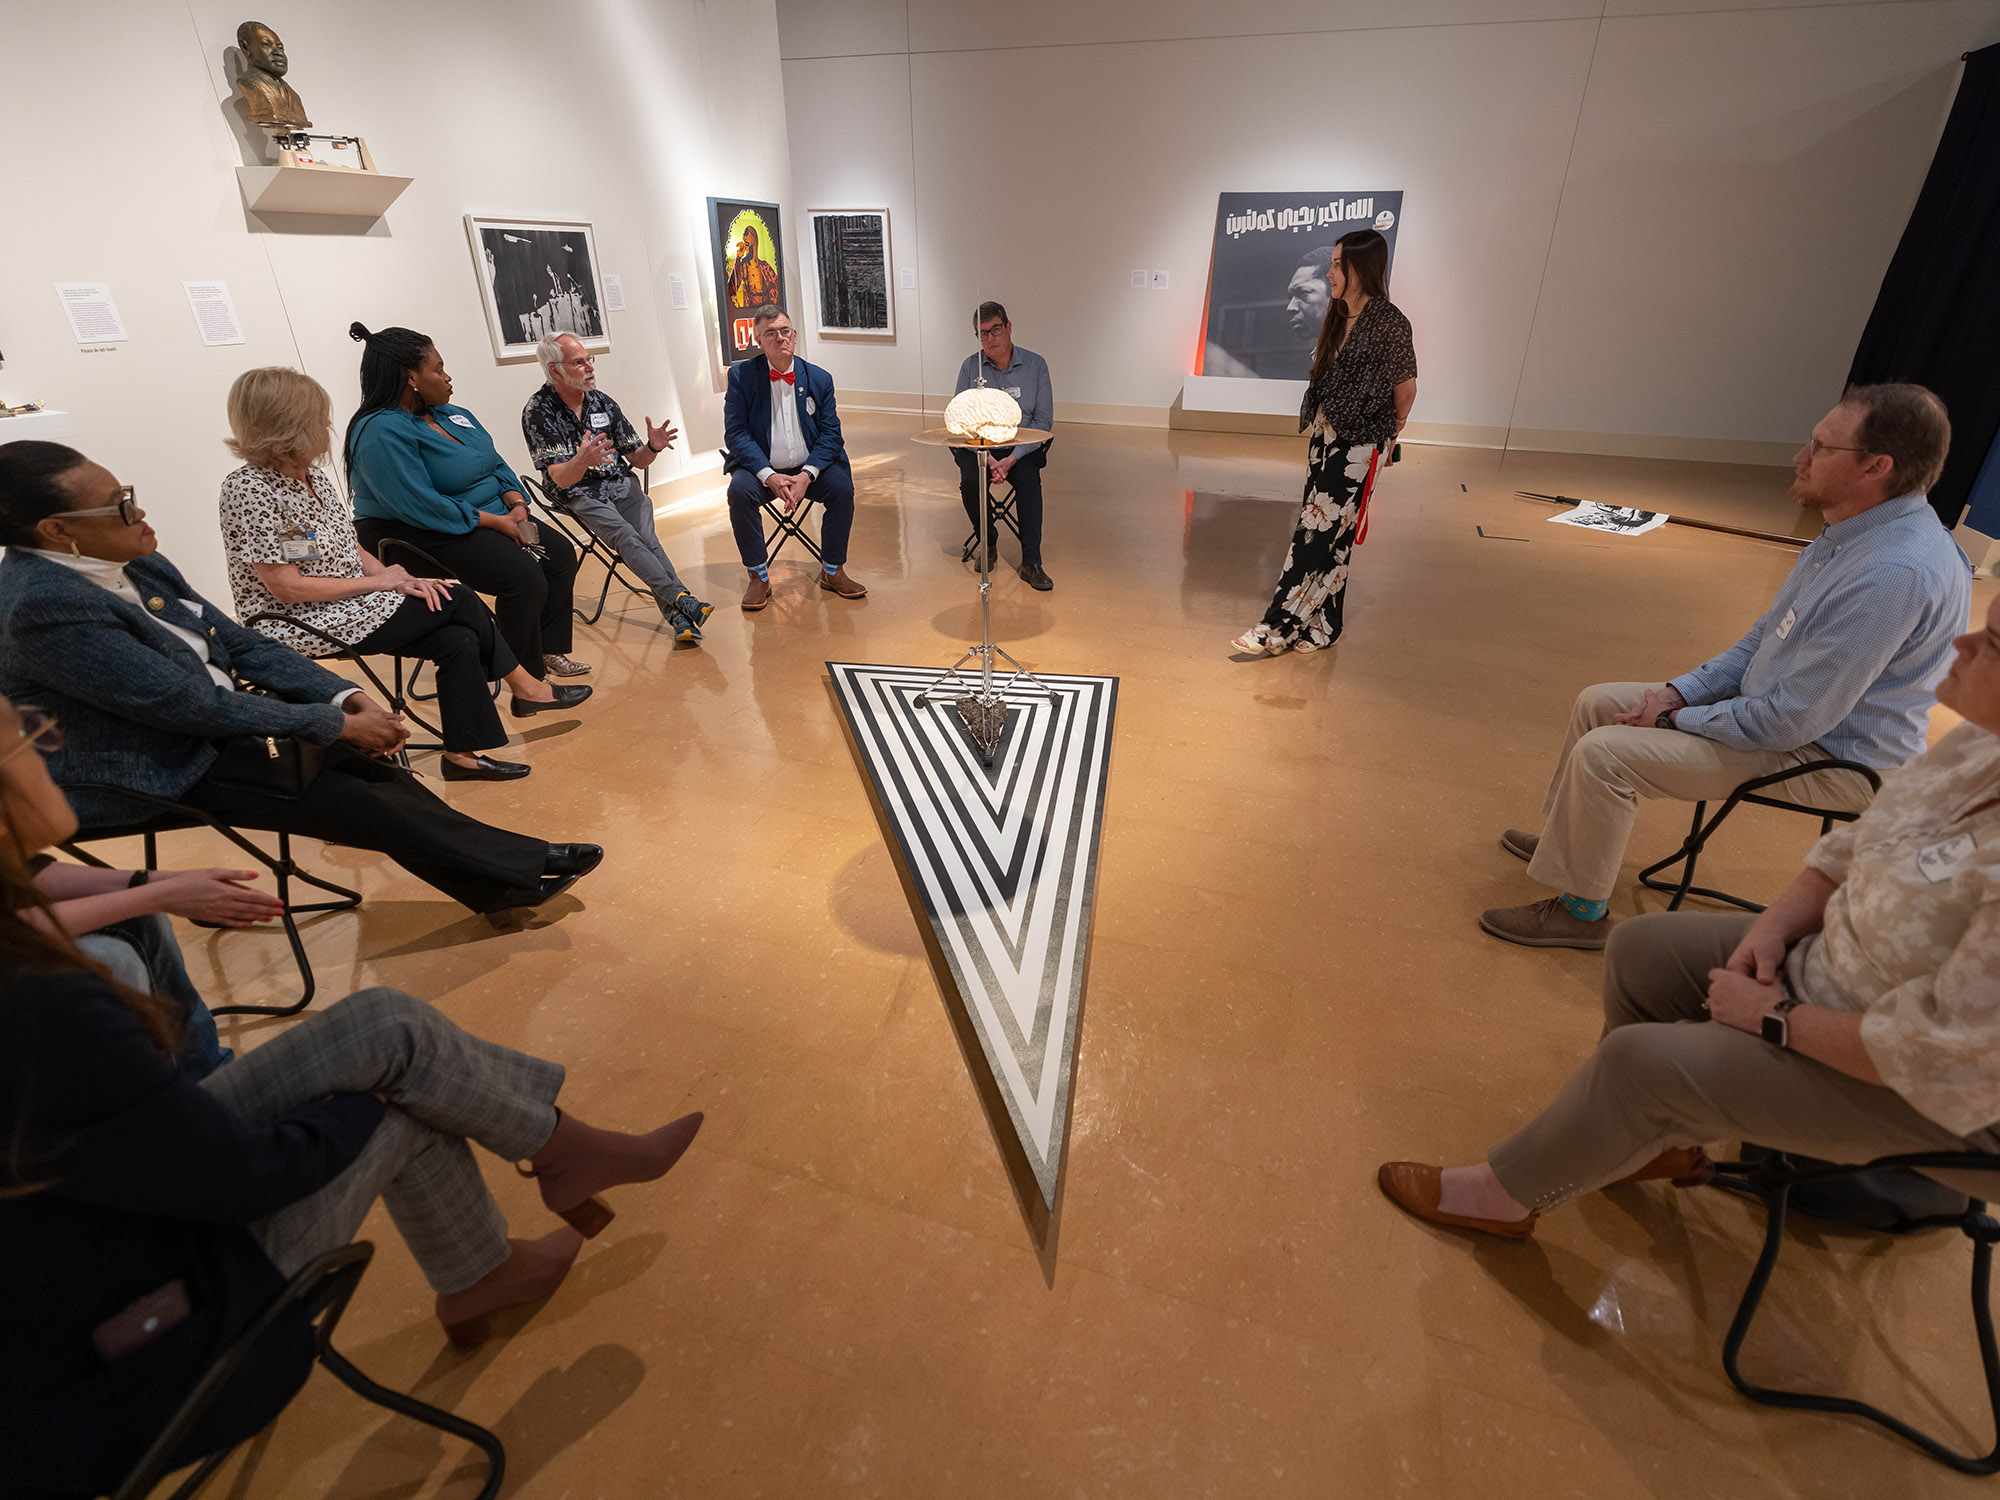 Educators ponder art, connect across schools during trip to museum